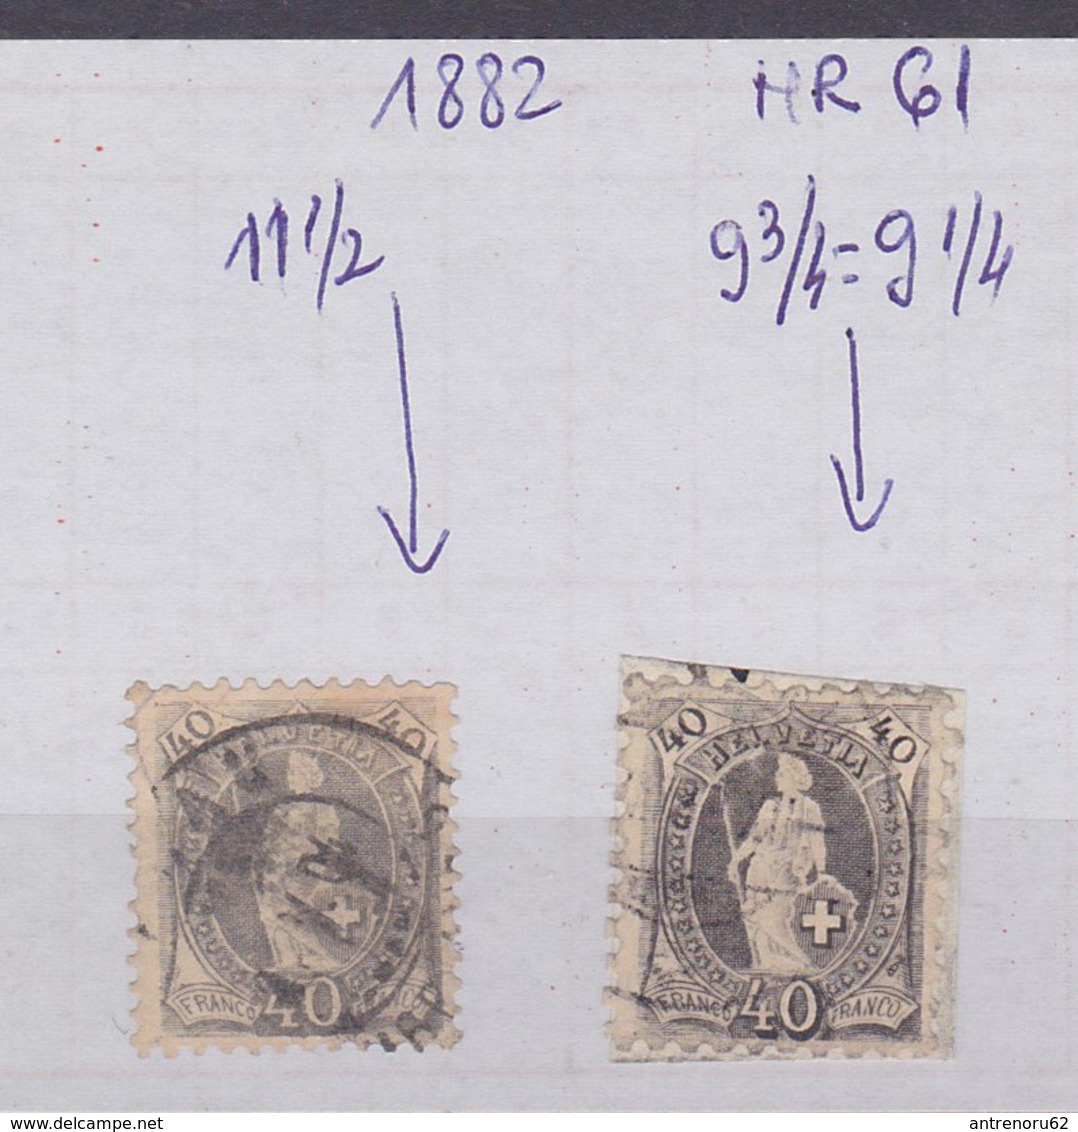 SWITZERLAND-1882-NR-61-GEZ-9.3/4-9.1/6-(COTE-750-EURO)USED-SEE-SCAN - Used Stamps